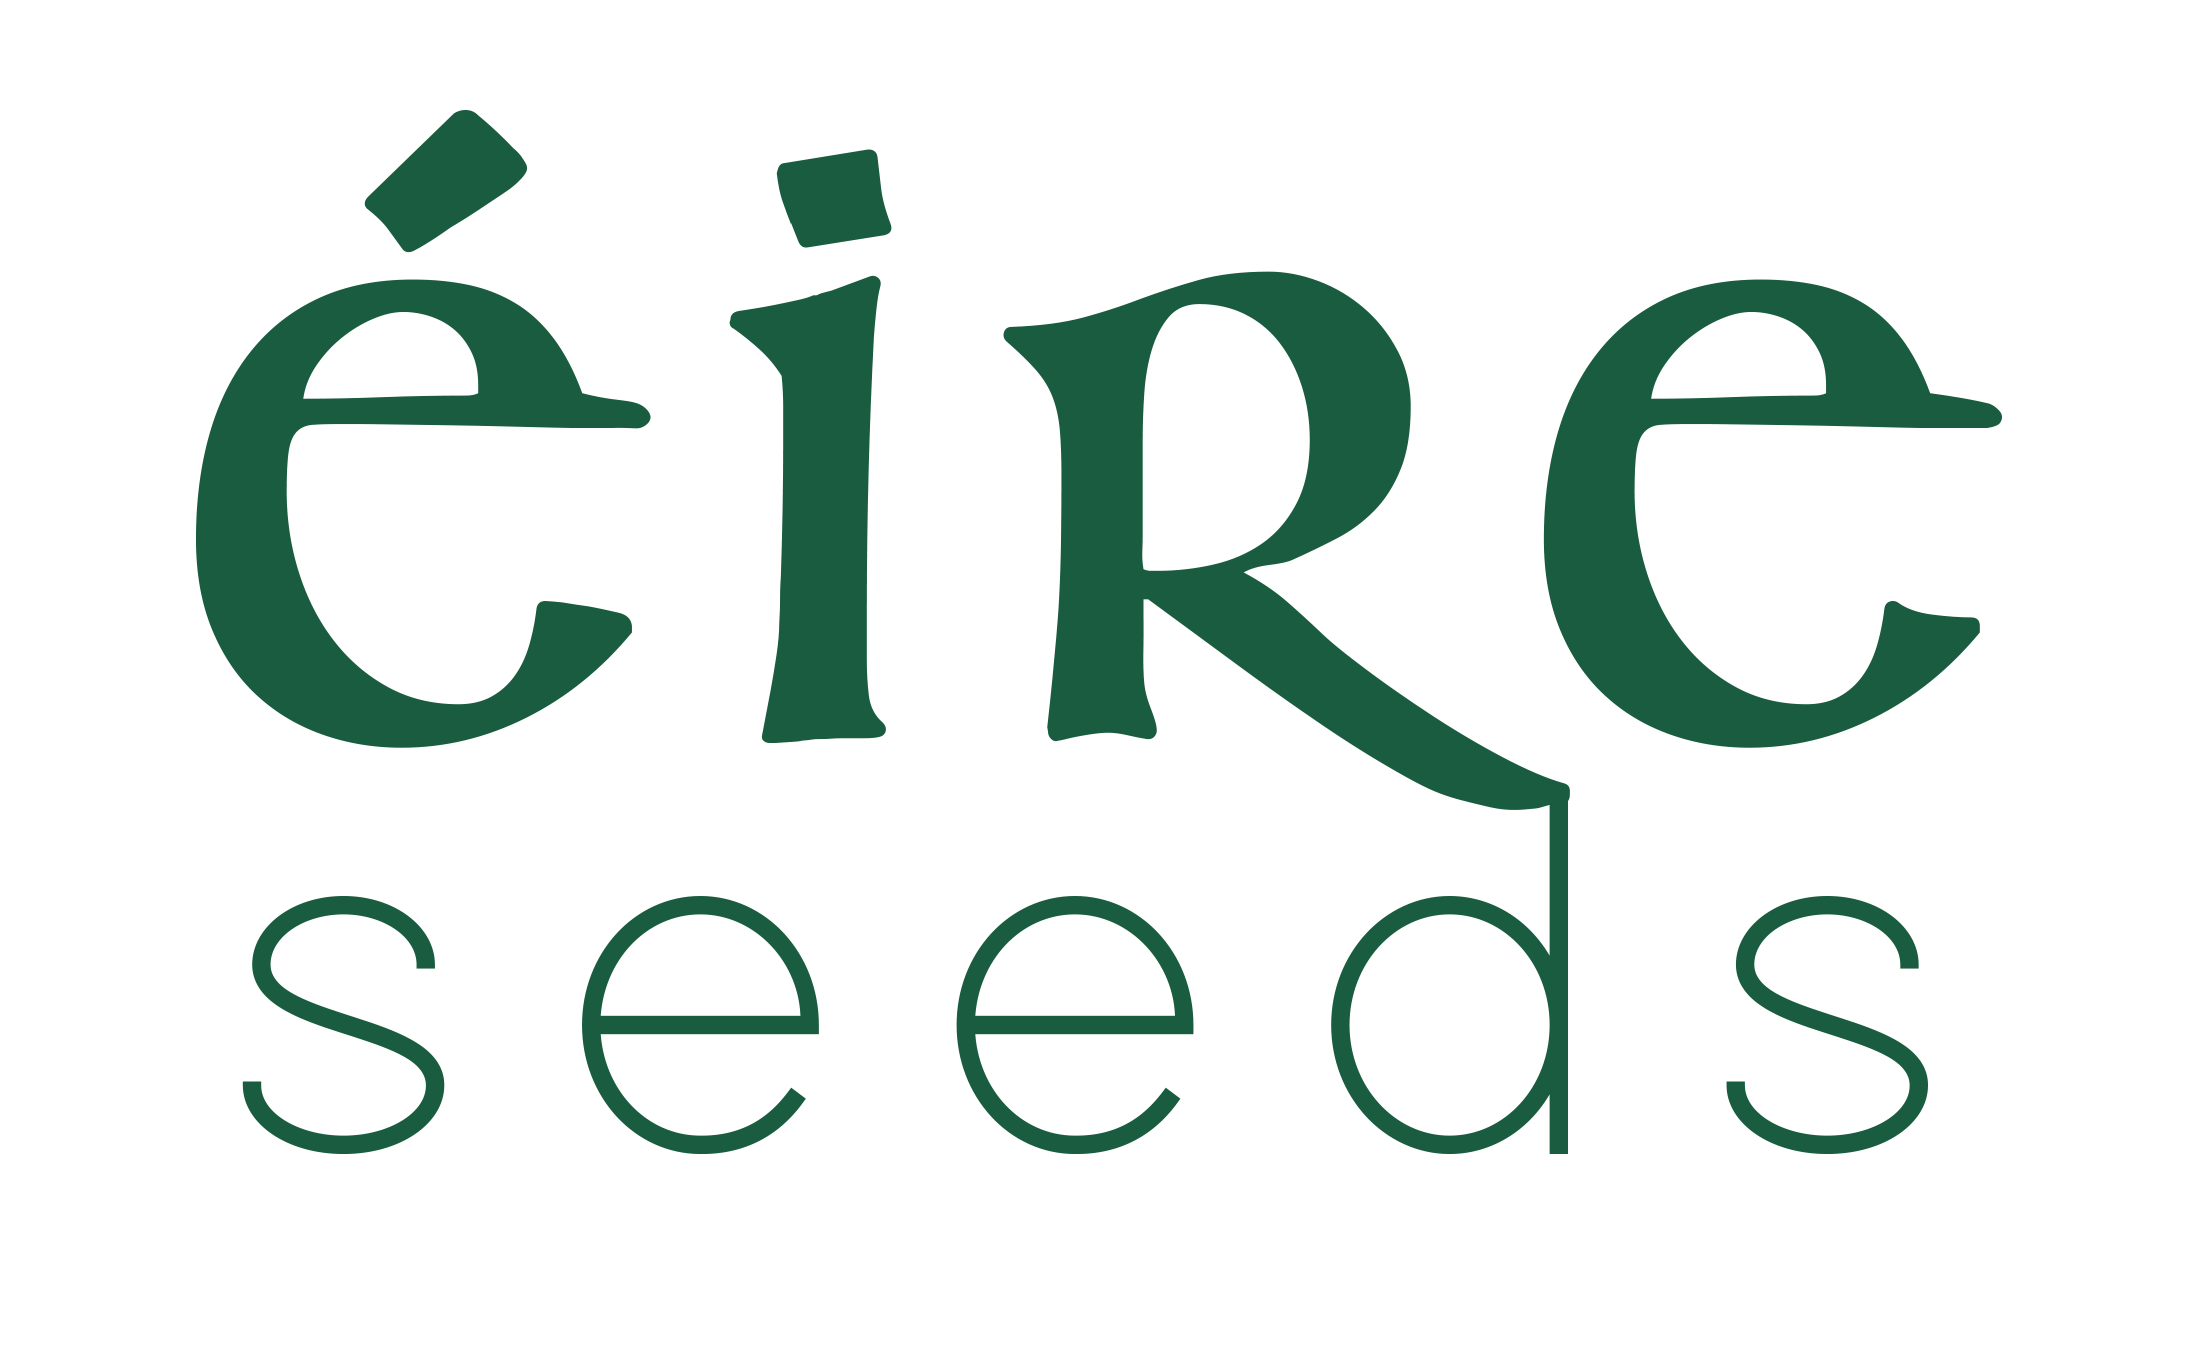 Eire Seeds